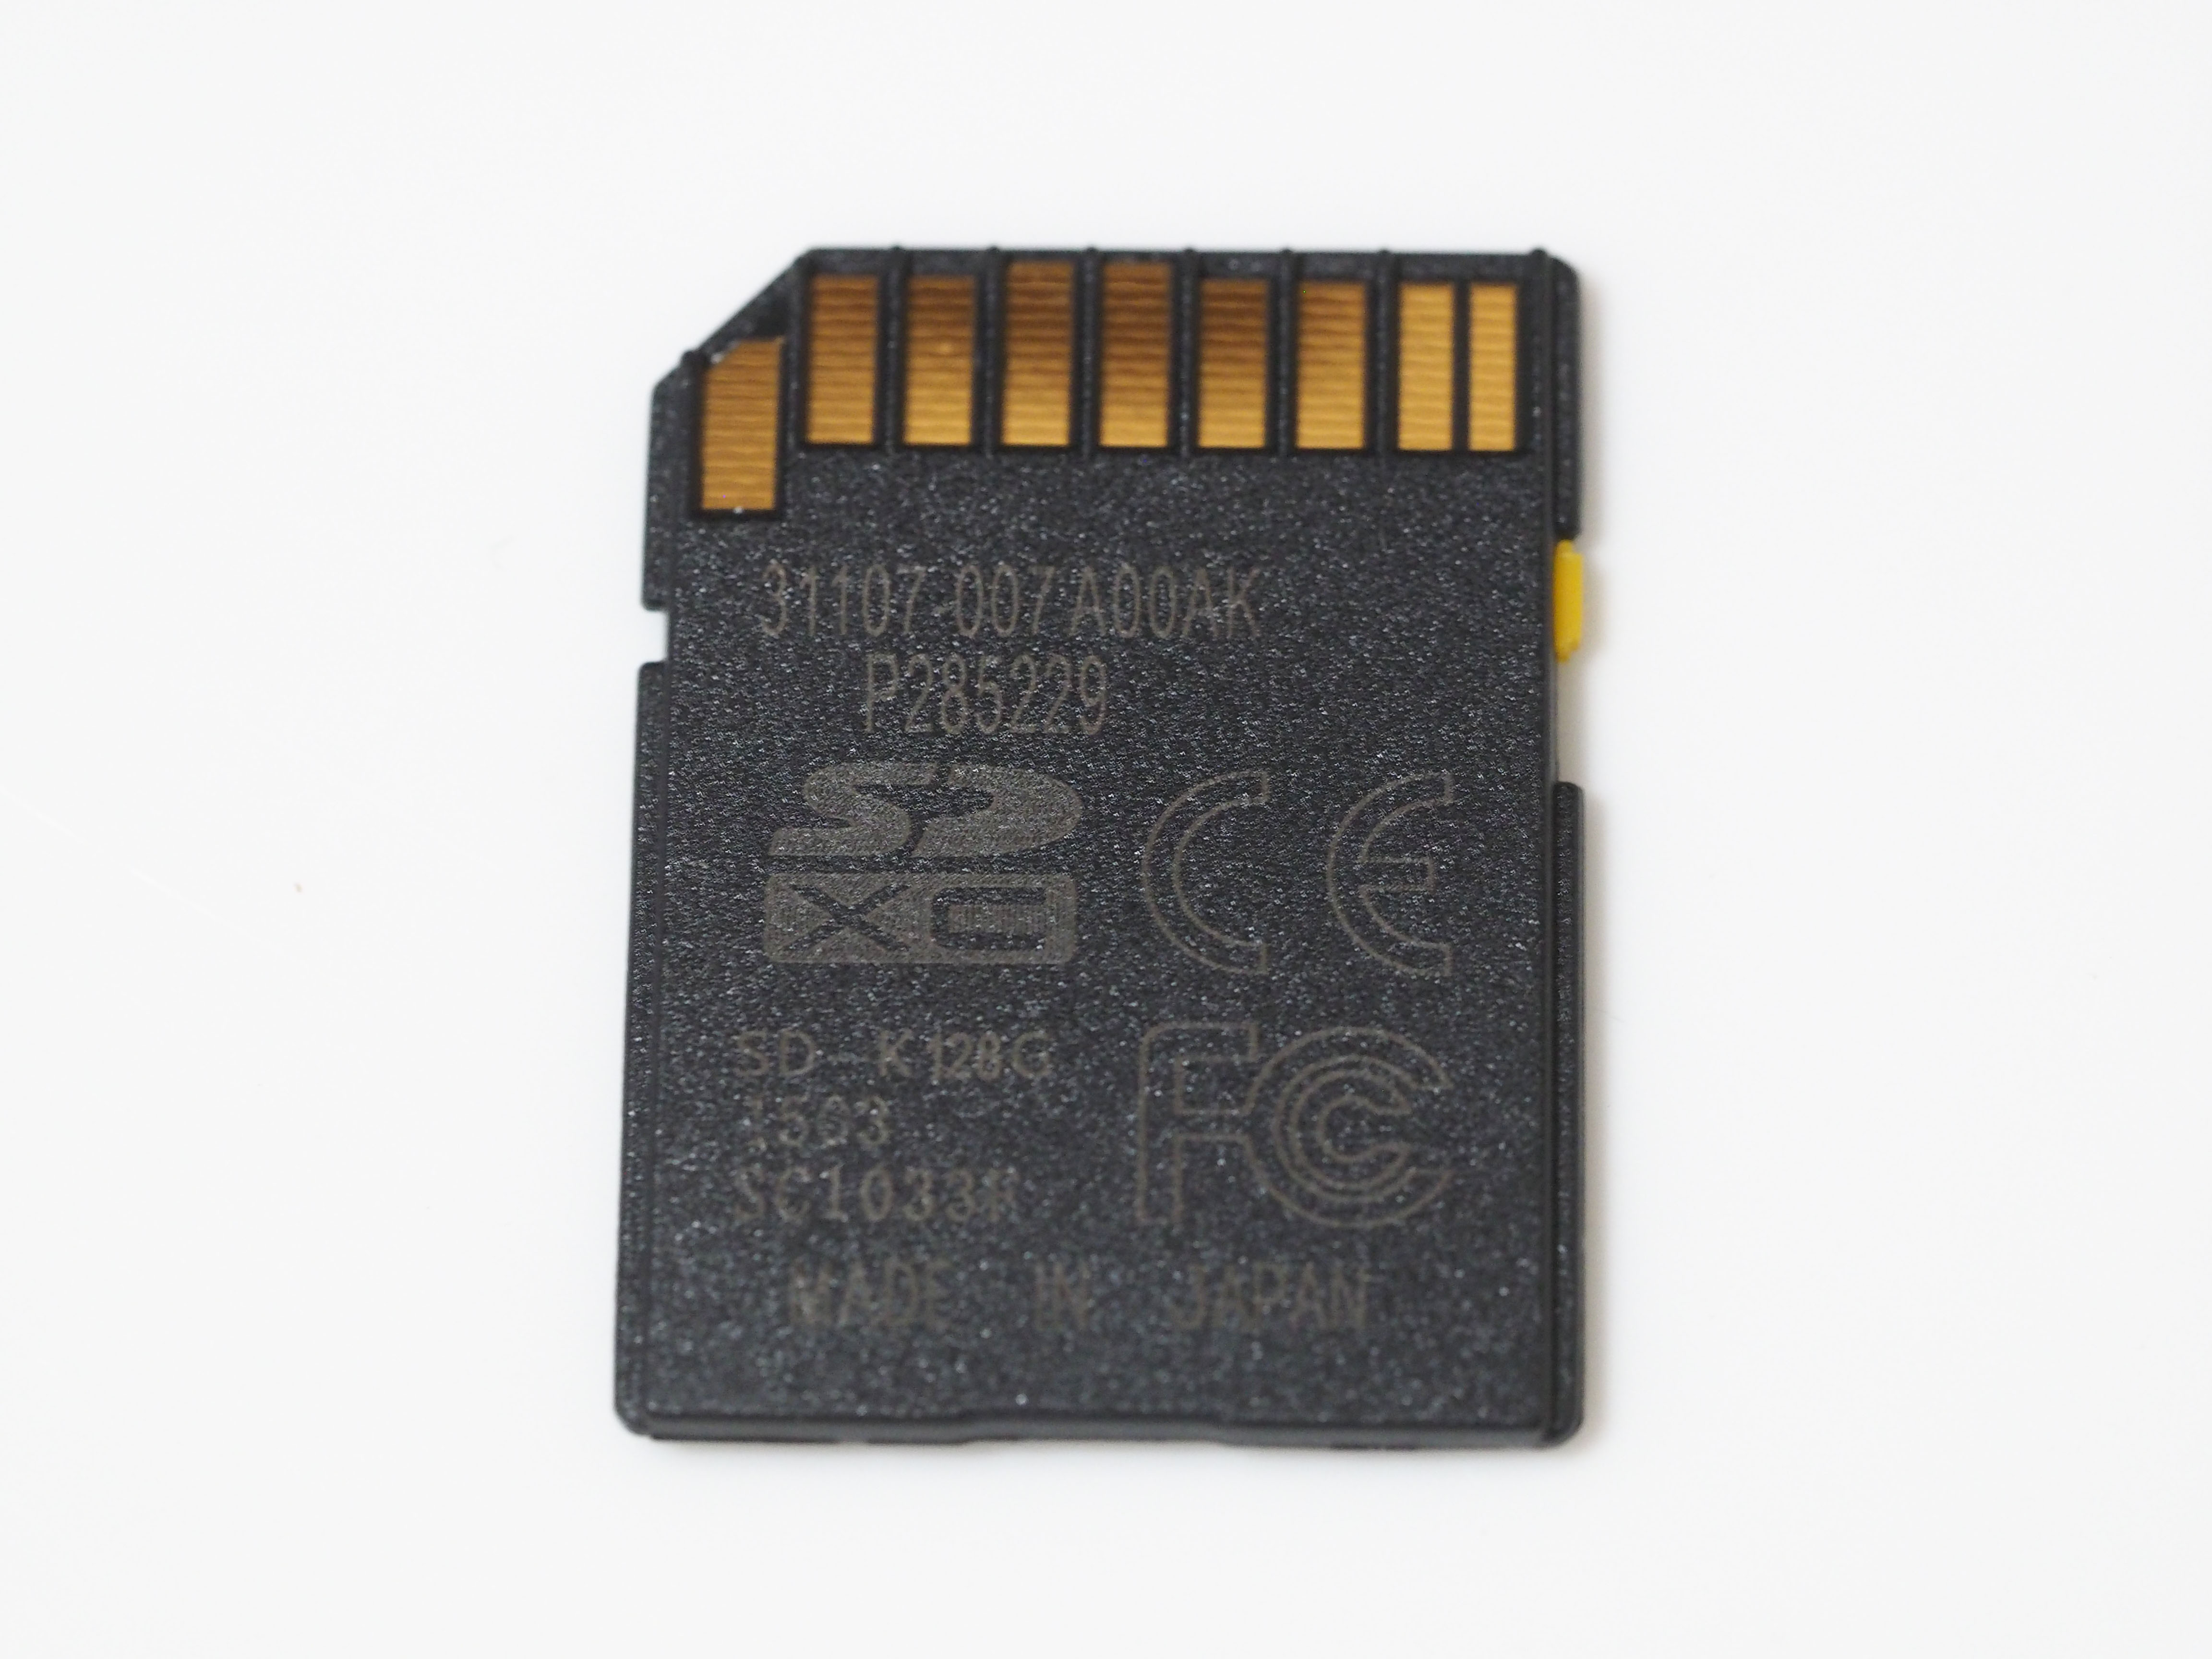 SANDISK (サンディスク) 128GB SDXCカード Extreme Pro SDSDXPA-128G-JU3 のレビュー | iPentec